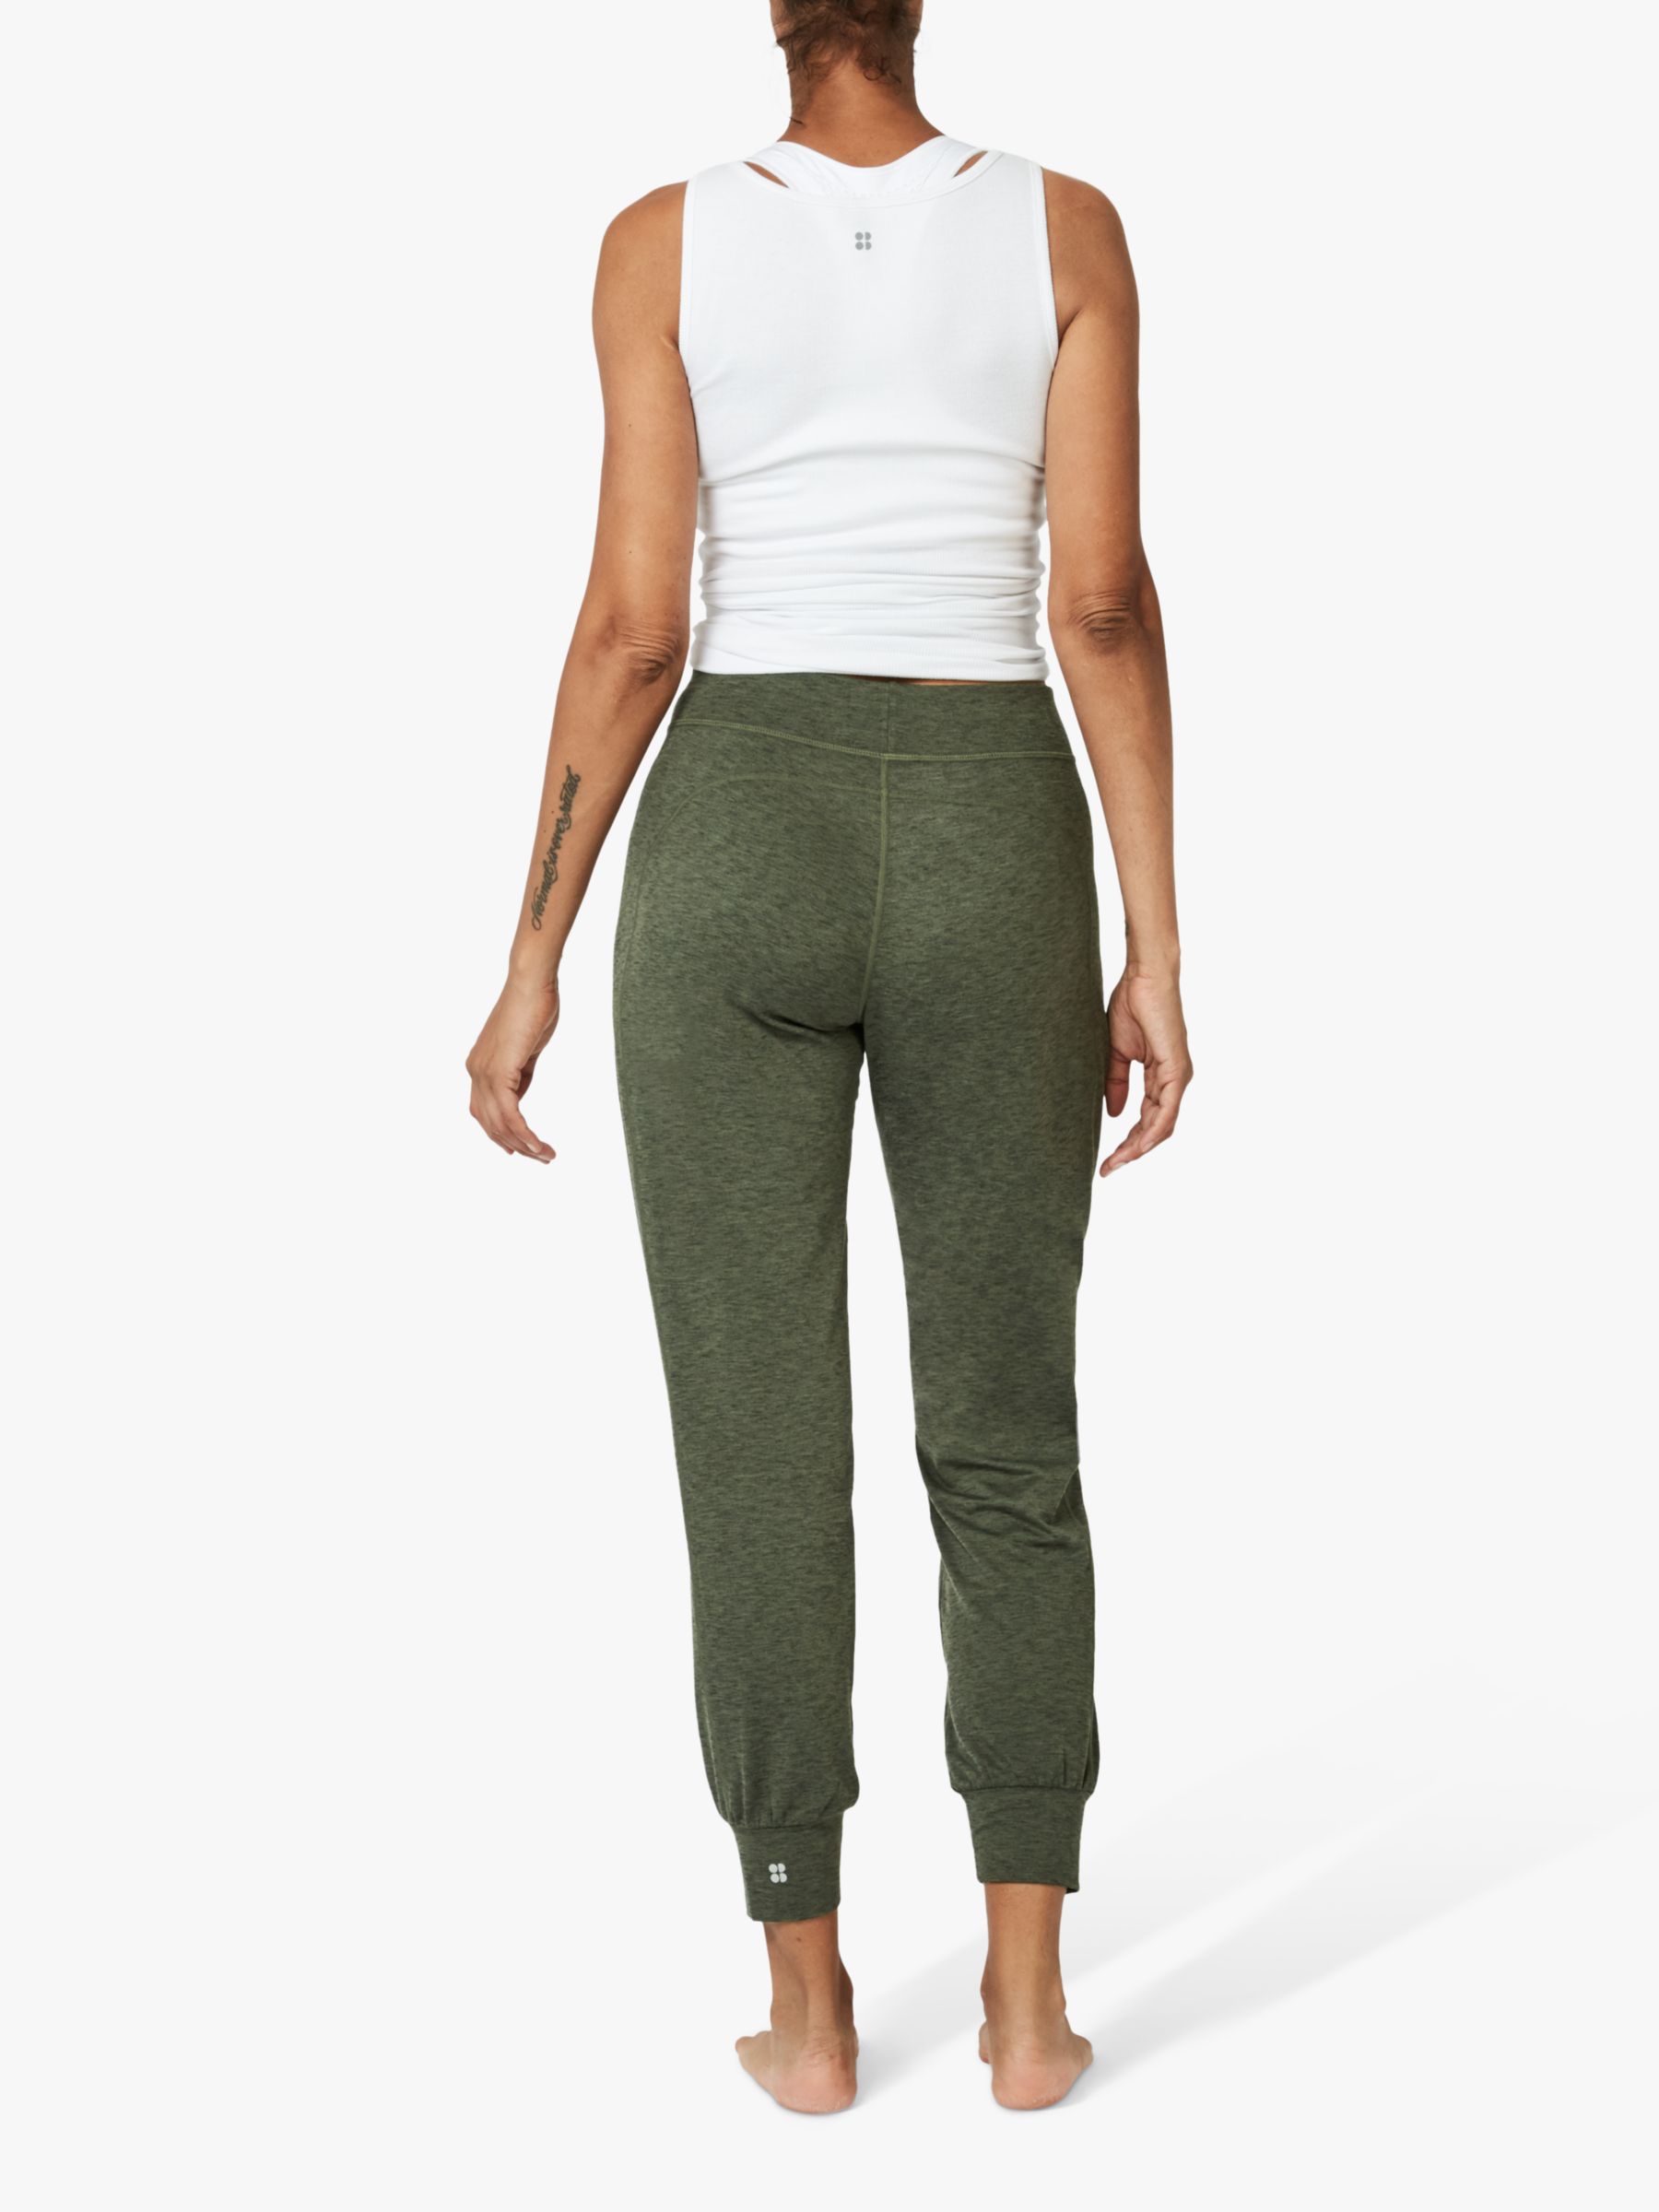 Sweaty Betty Gary Yoga Pants, Olive Marl, L Short